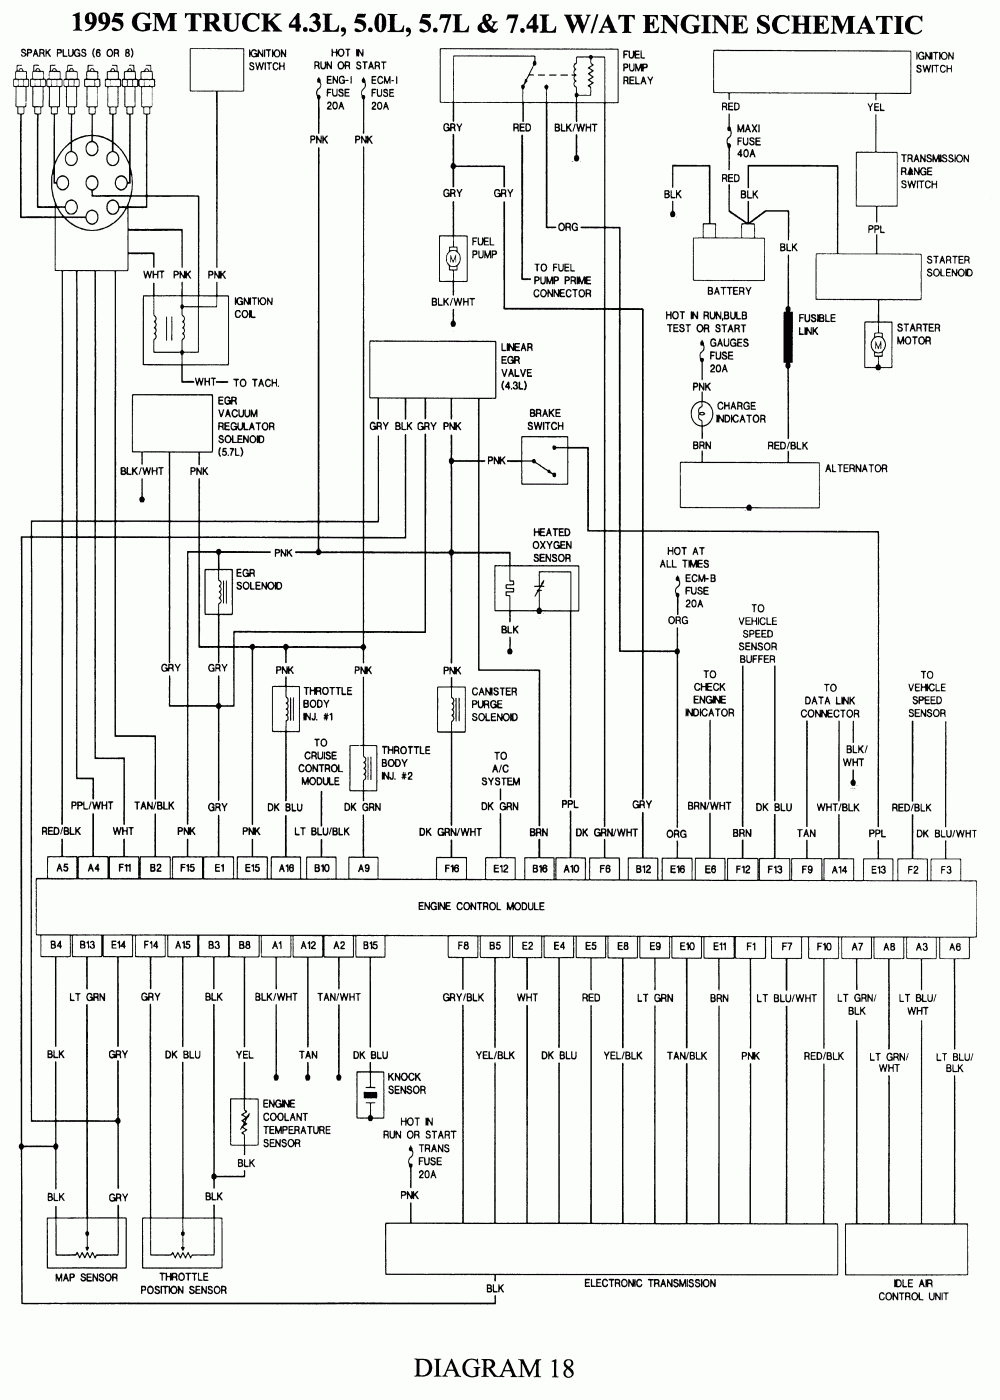 97 Chevy Truck Wiring Diagram | Wiring Diagram - 1997 Chevy Silverado Wiring Diagram